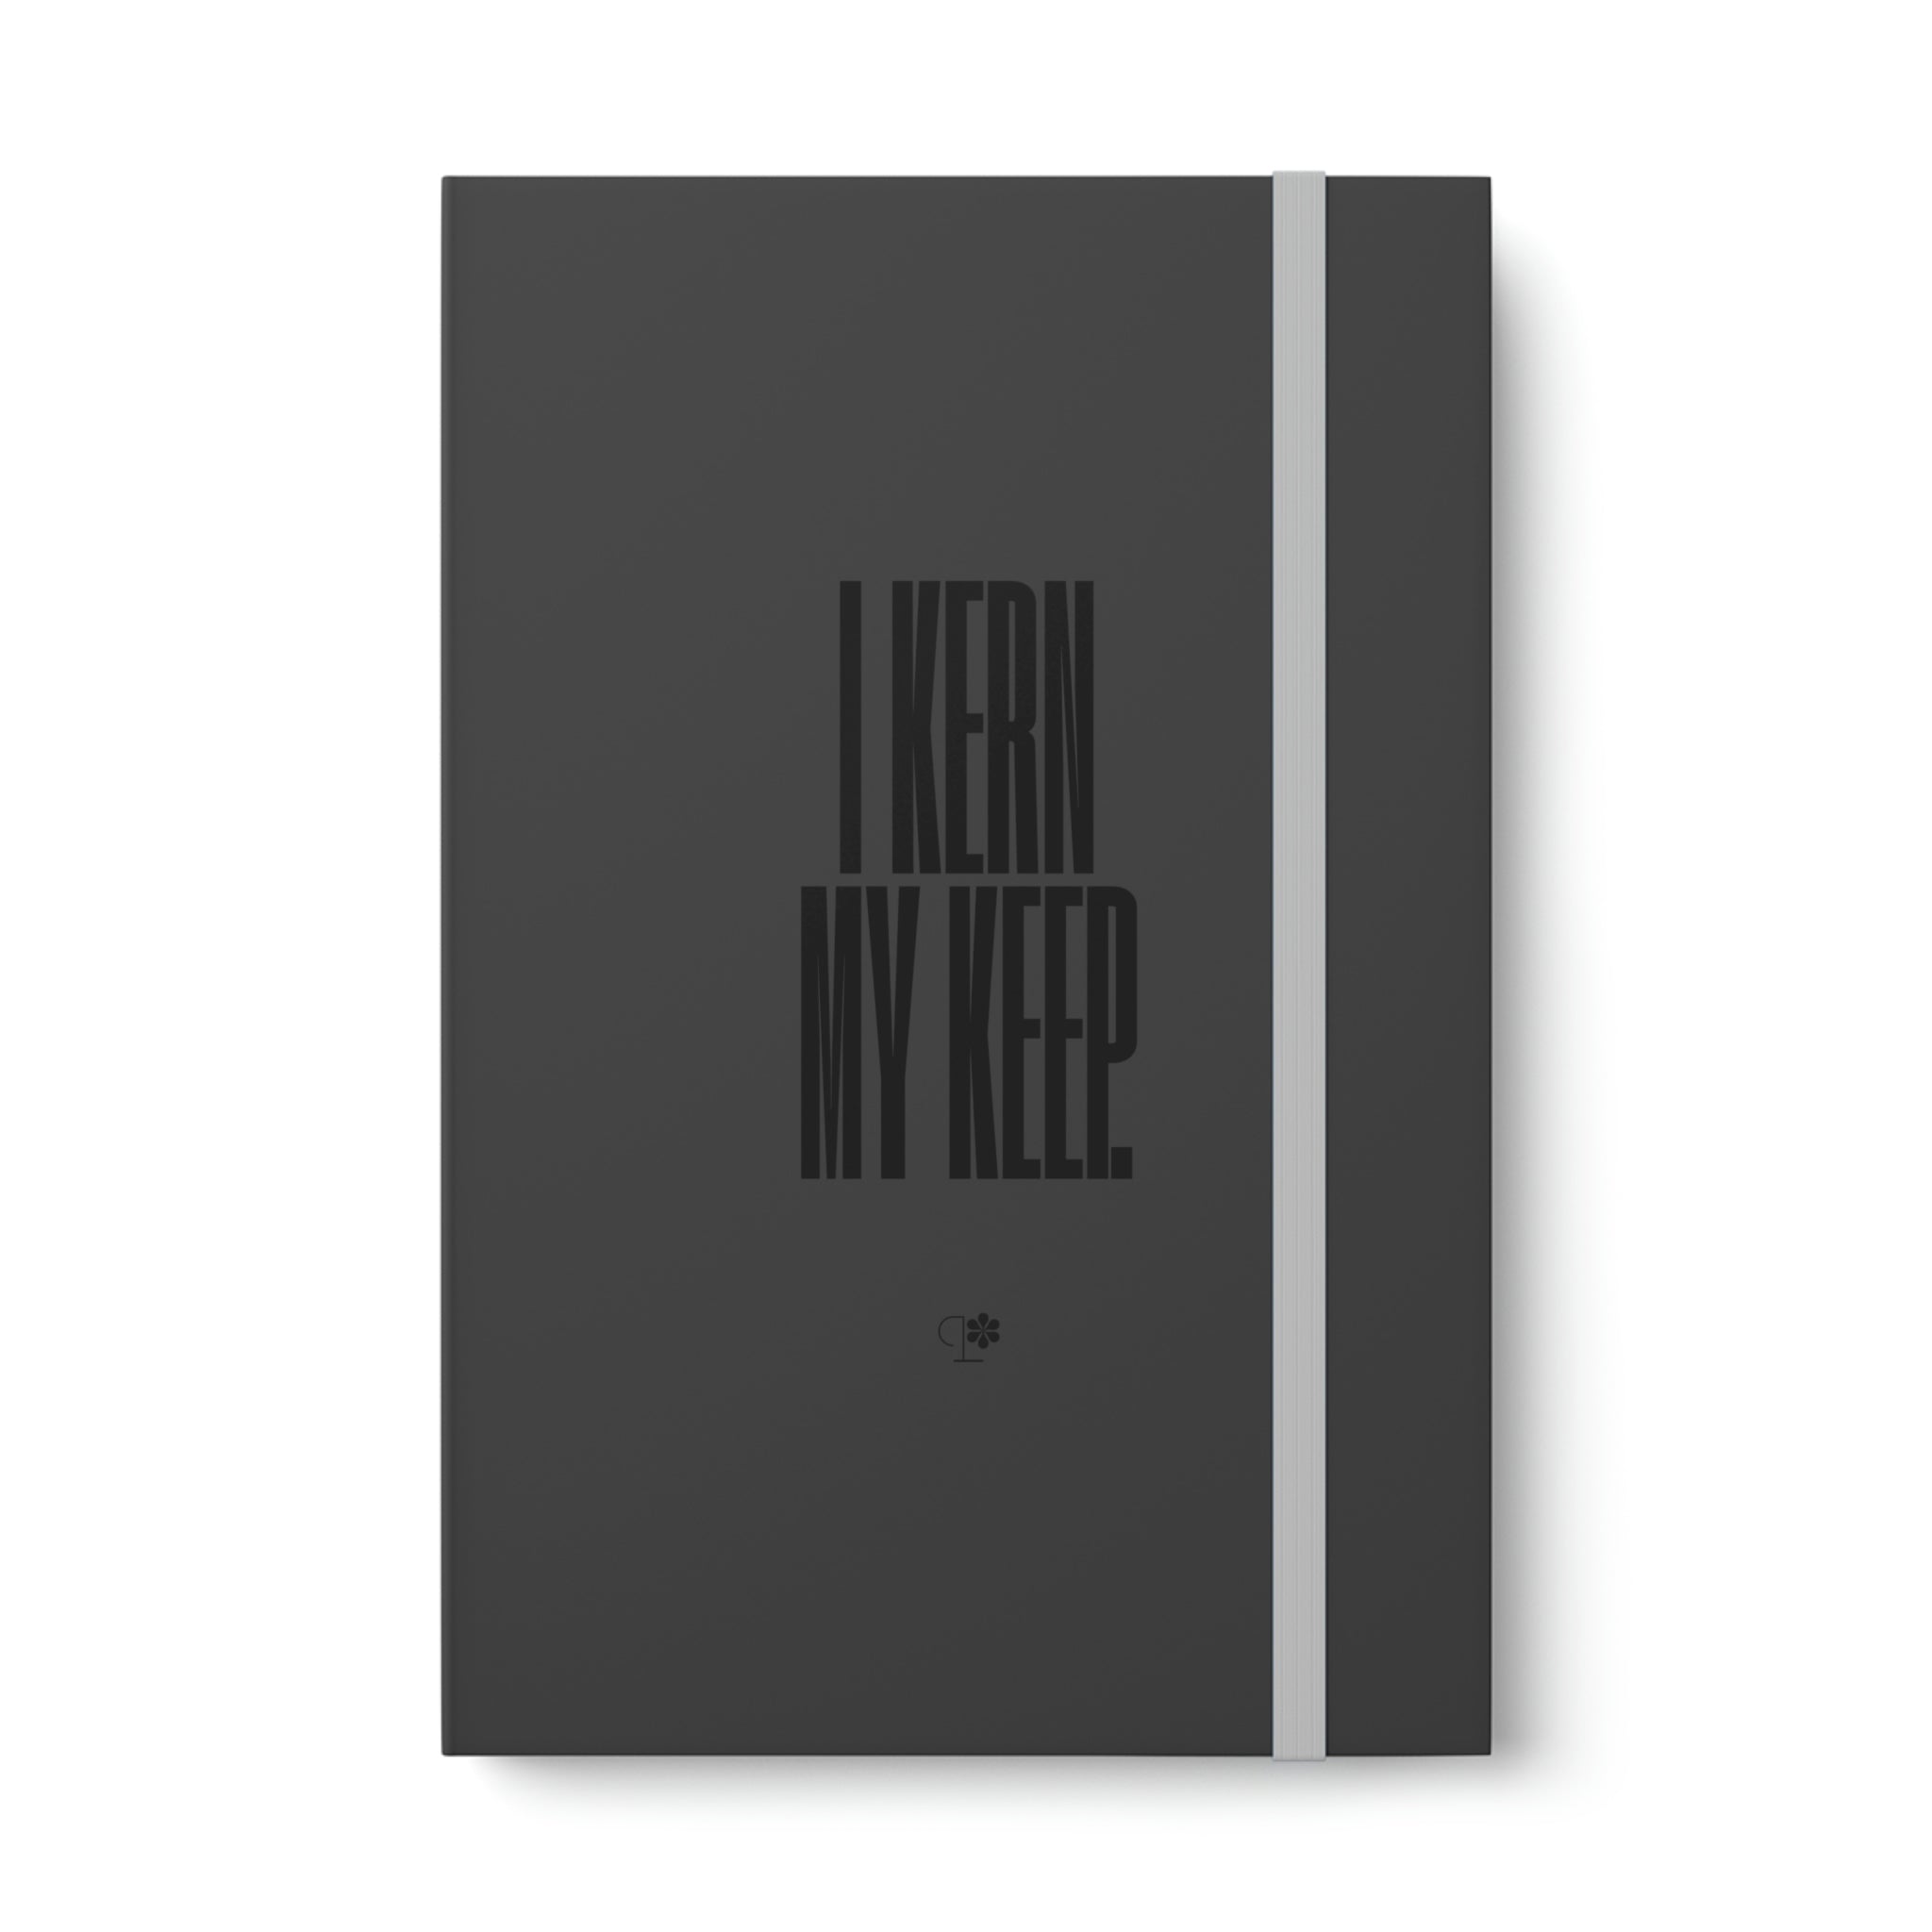 I Kern My Keep (Hype) Notebook - Ruled